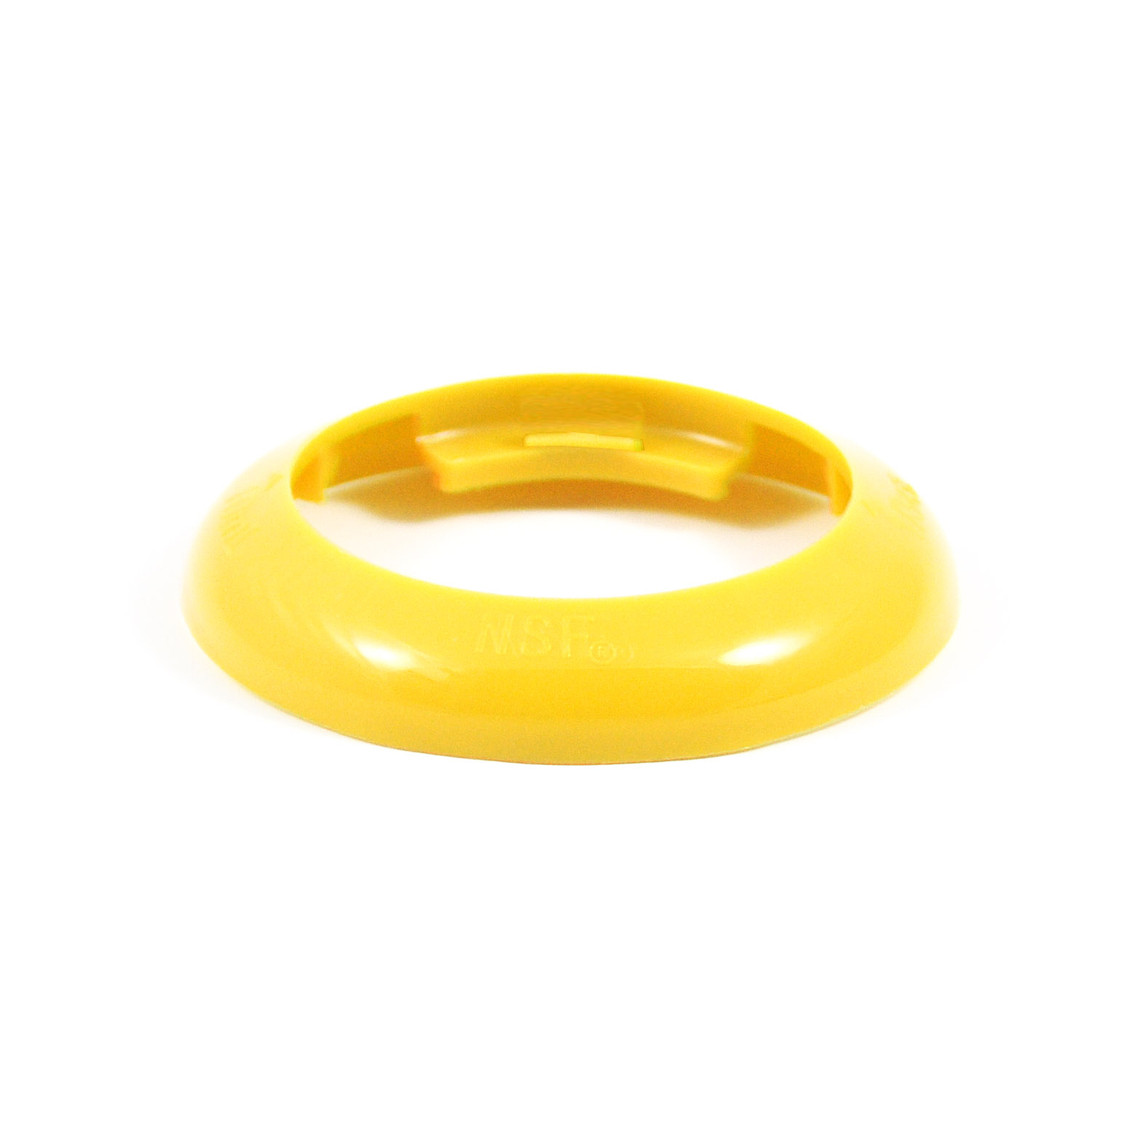 Yellow 2/3oz (20ml) portion control ring